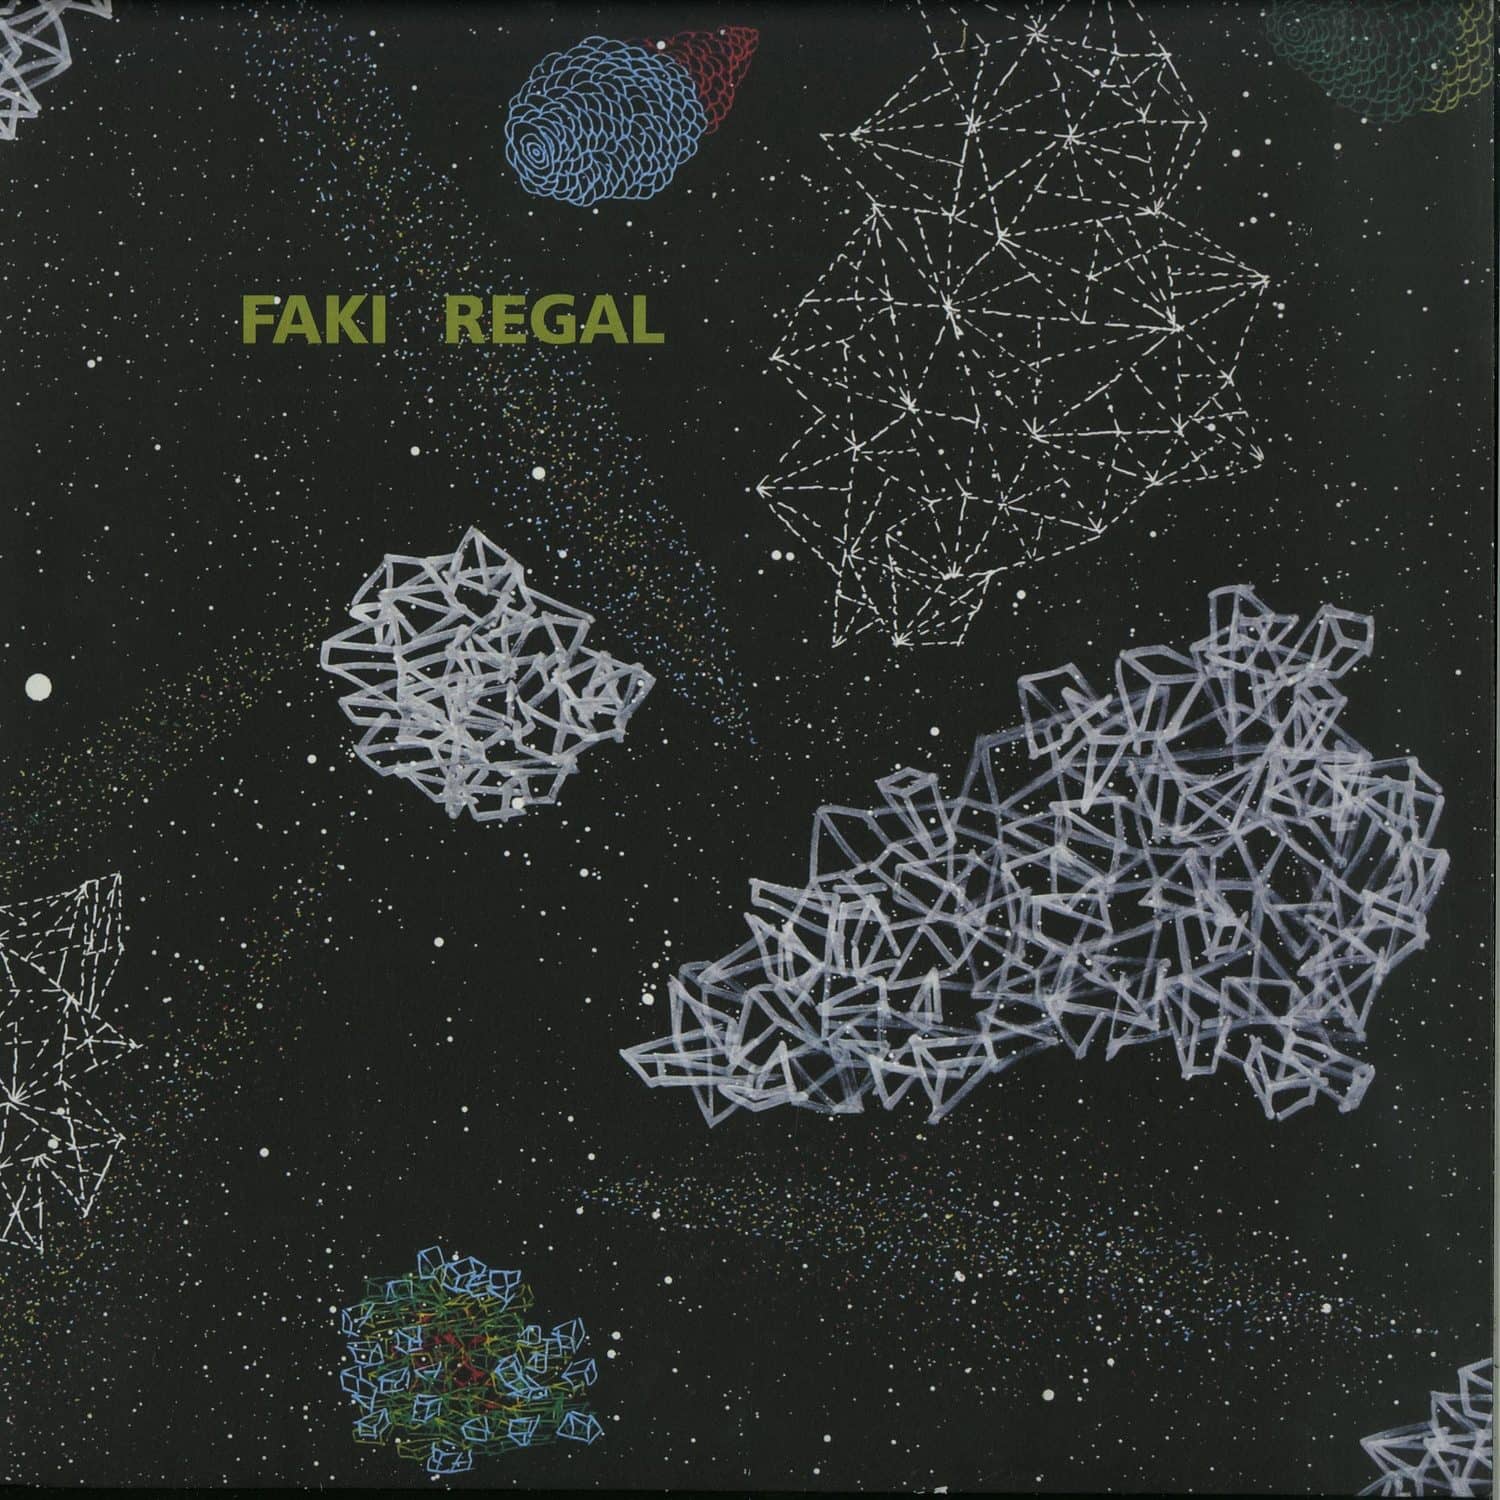 Faki Regal - THE END